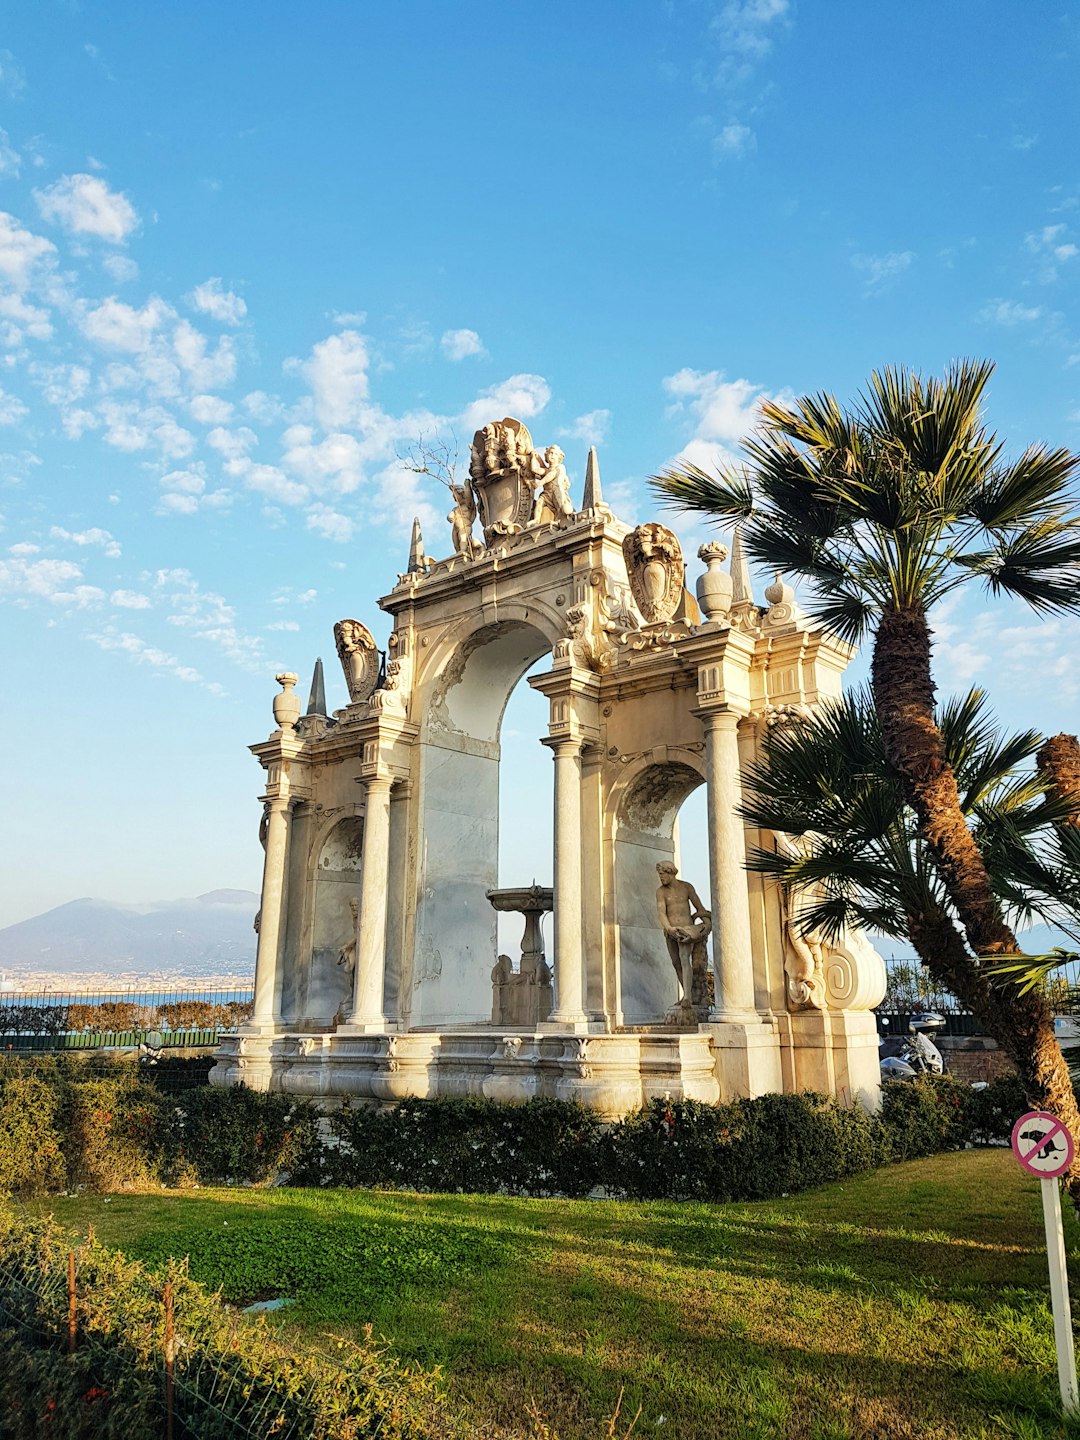 The Fontana del Gigante in Naples, Italy.
For more visual travel inspiration visit our instagram: https://www.instagram.com/reiseuhu/